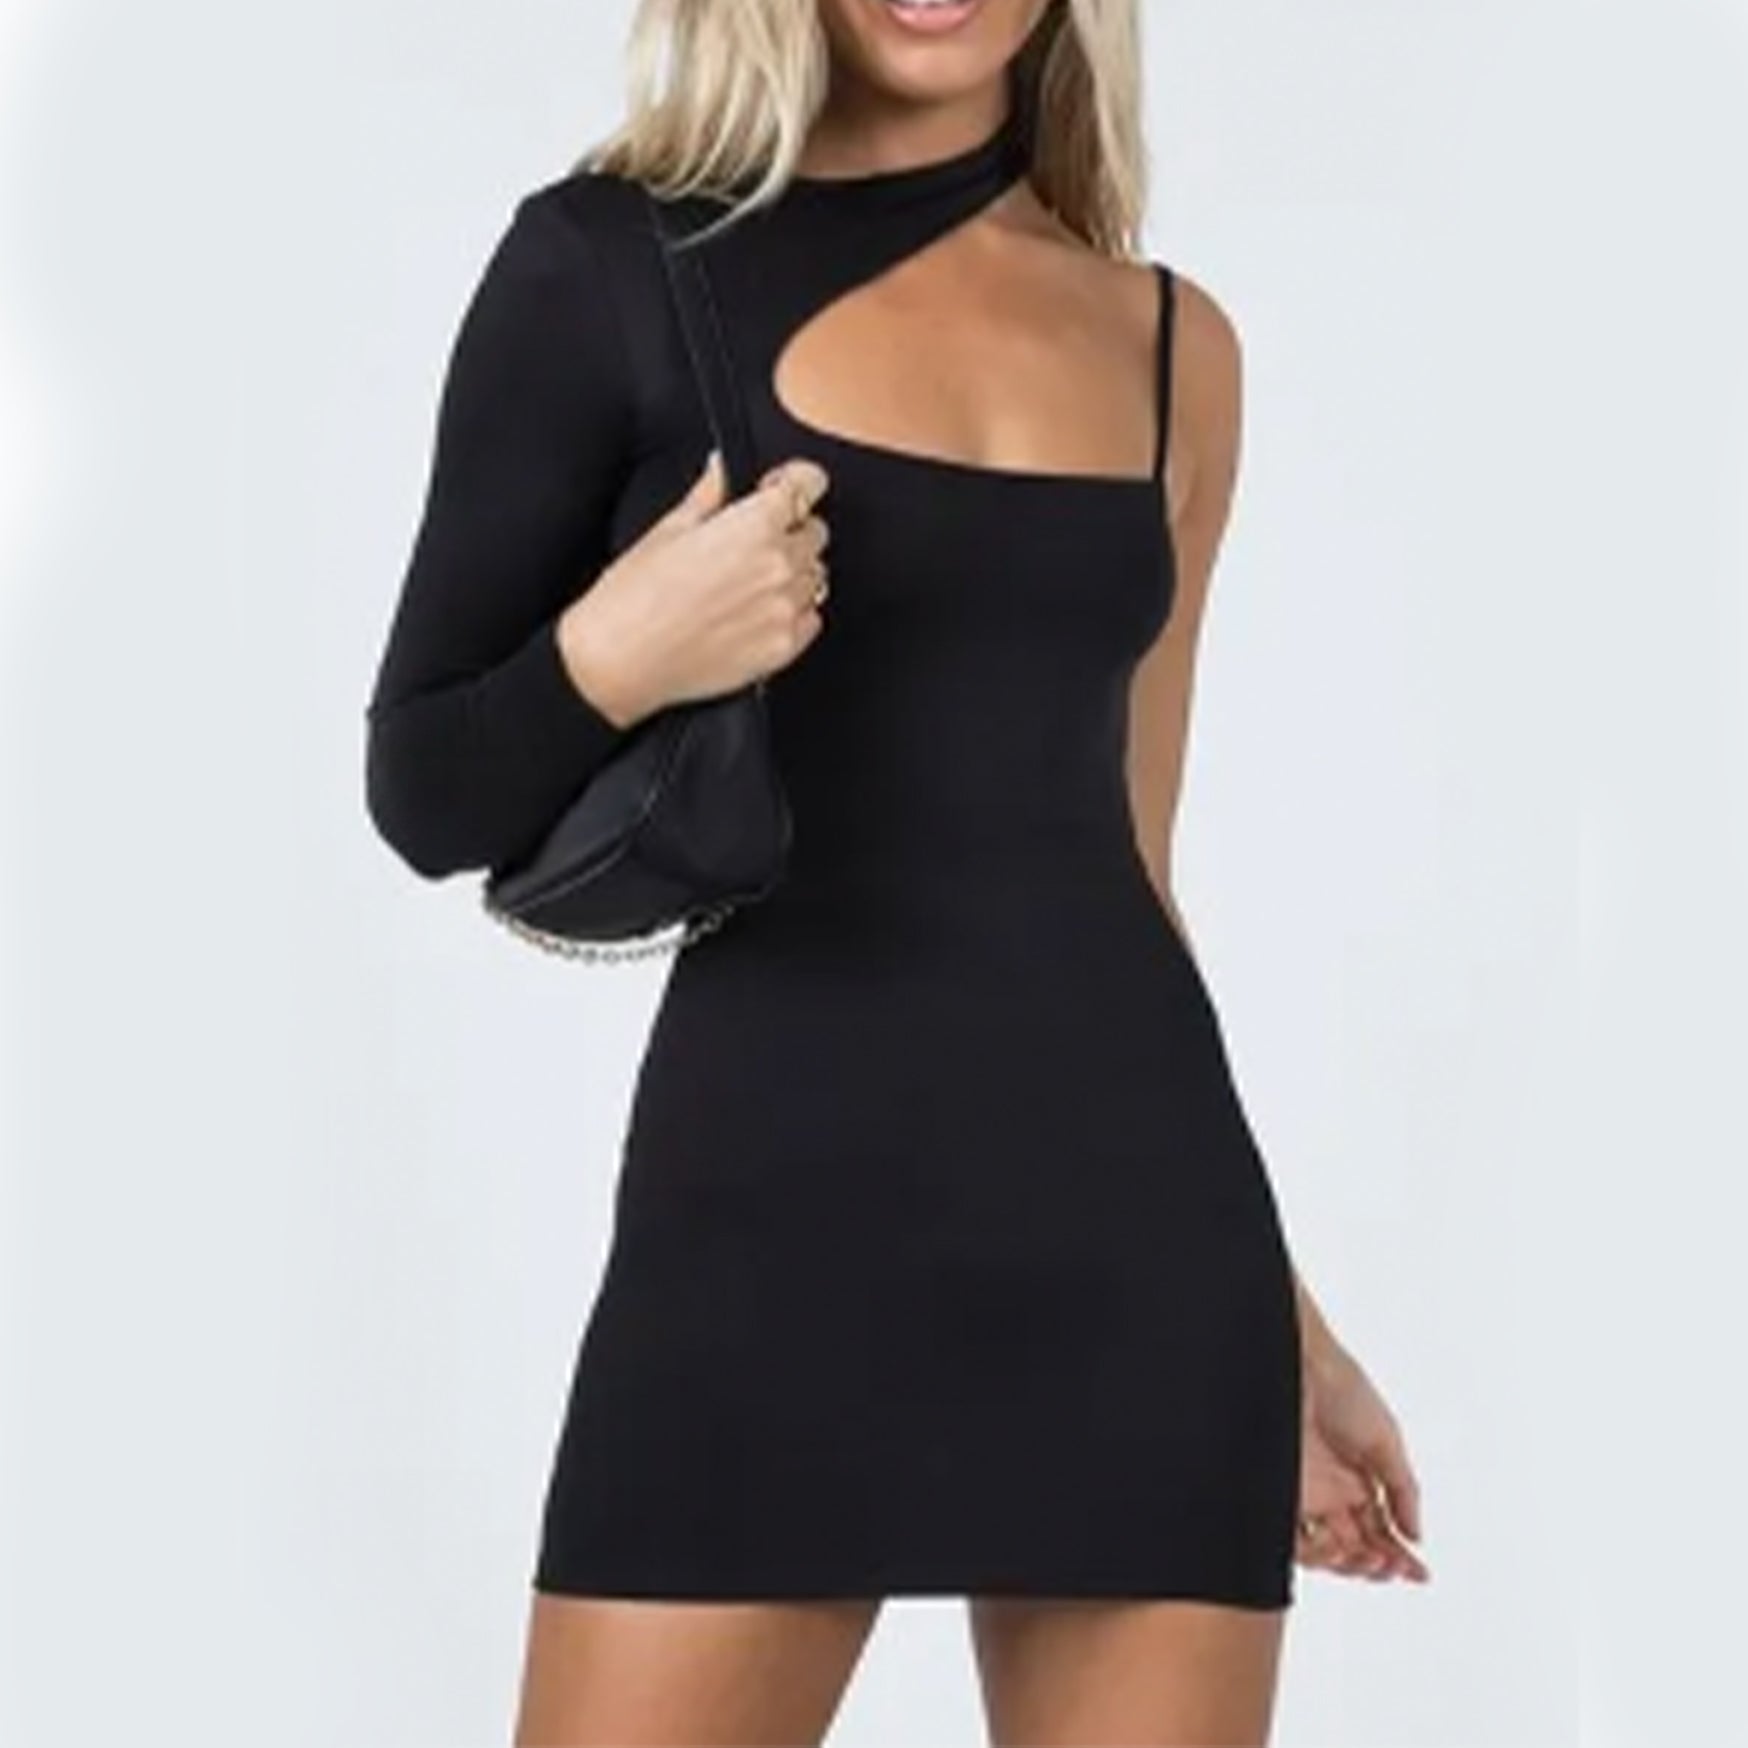 Simplicity Bodycon Dress - Black XS